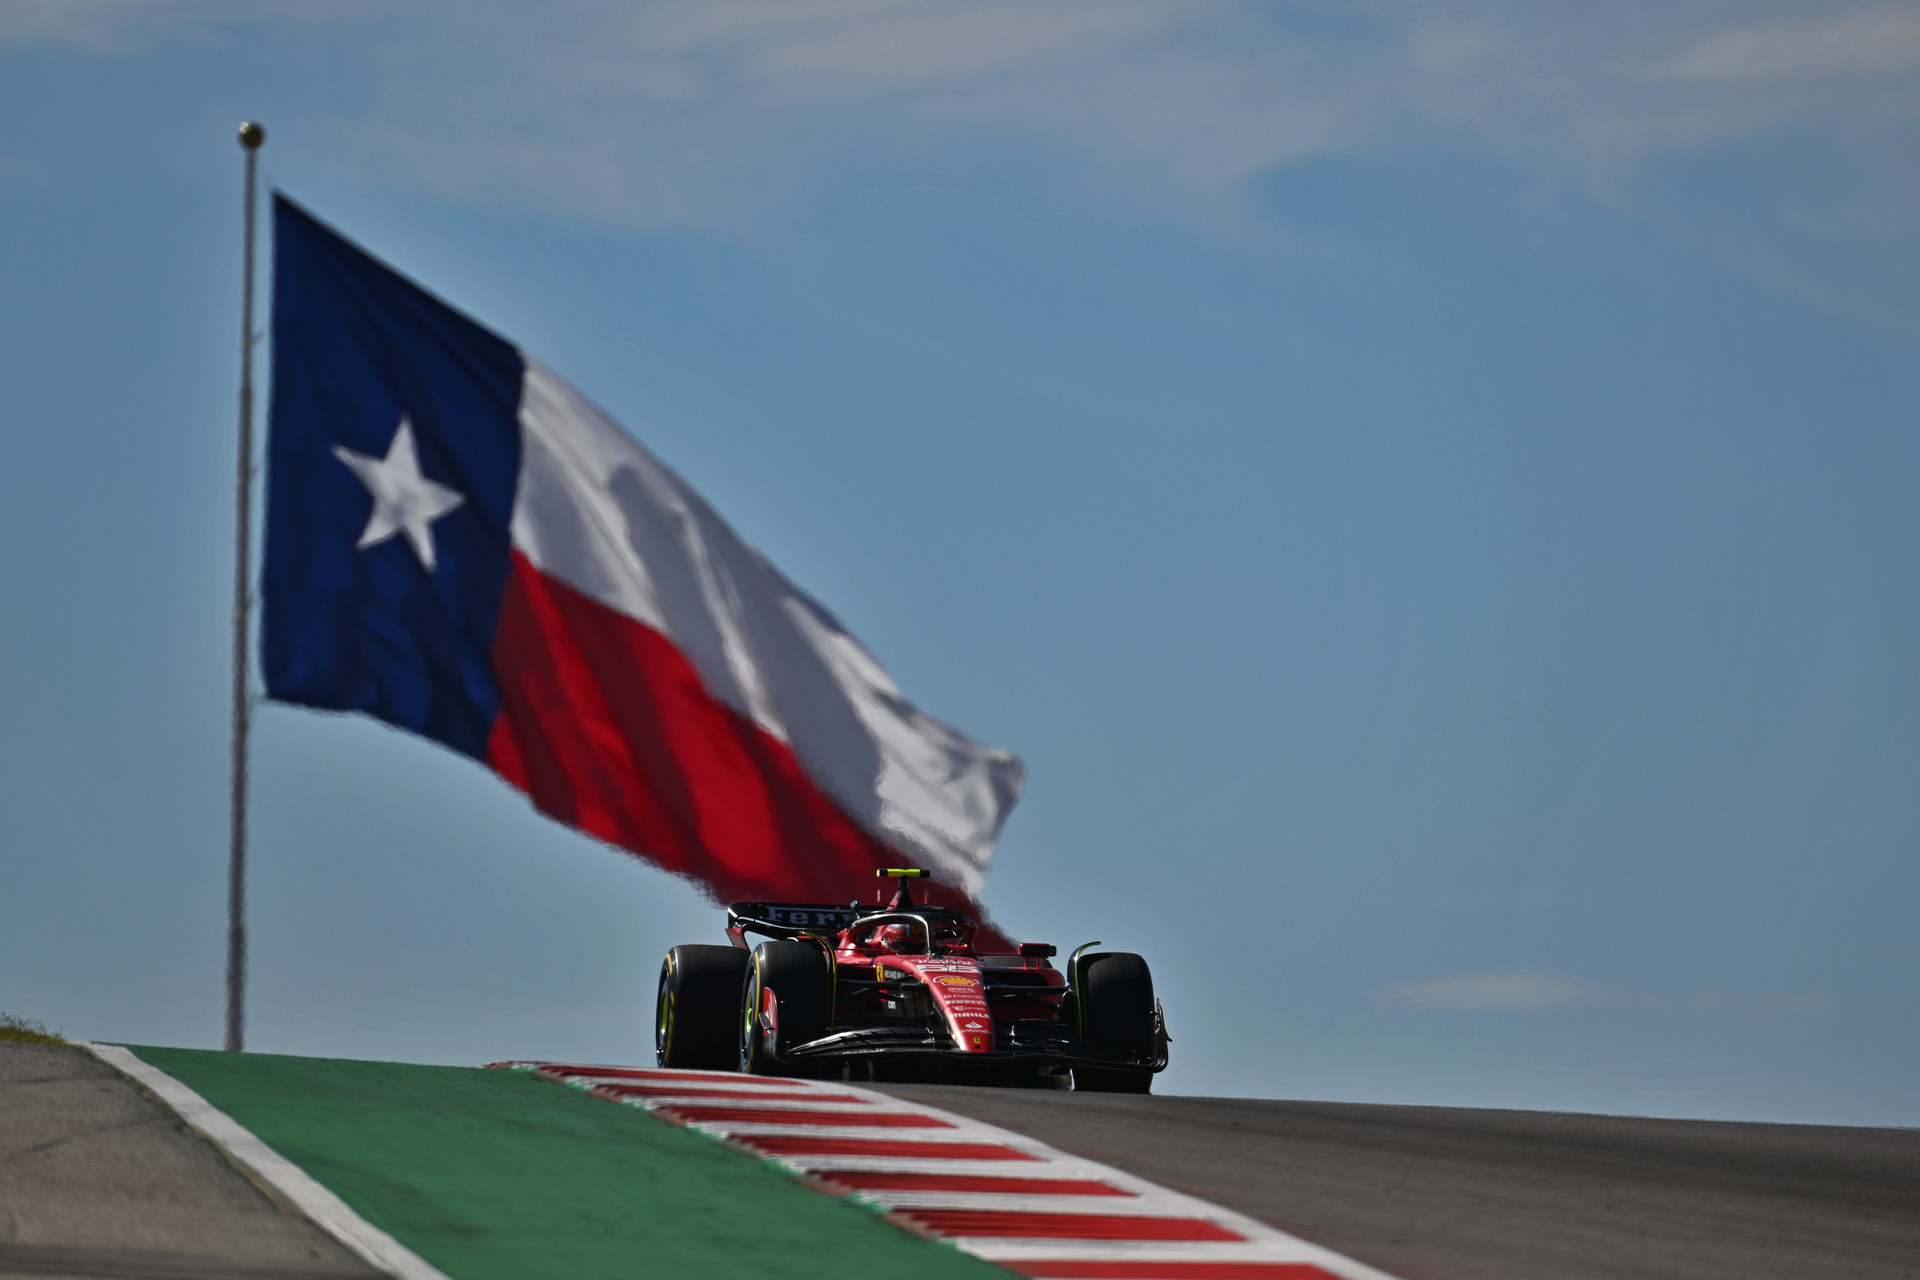 Gran Premio degli Stati Uniti – Race recap: Carlos quarto, Charles sesto